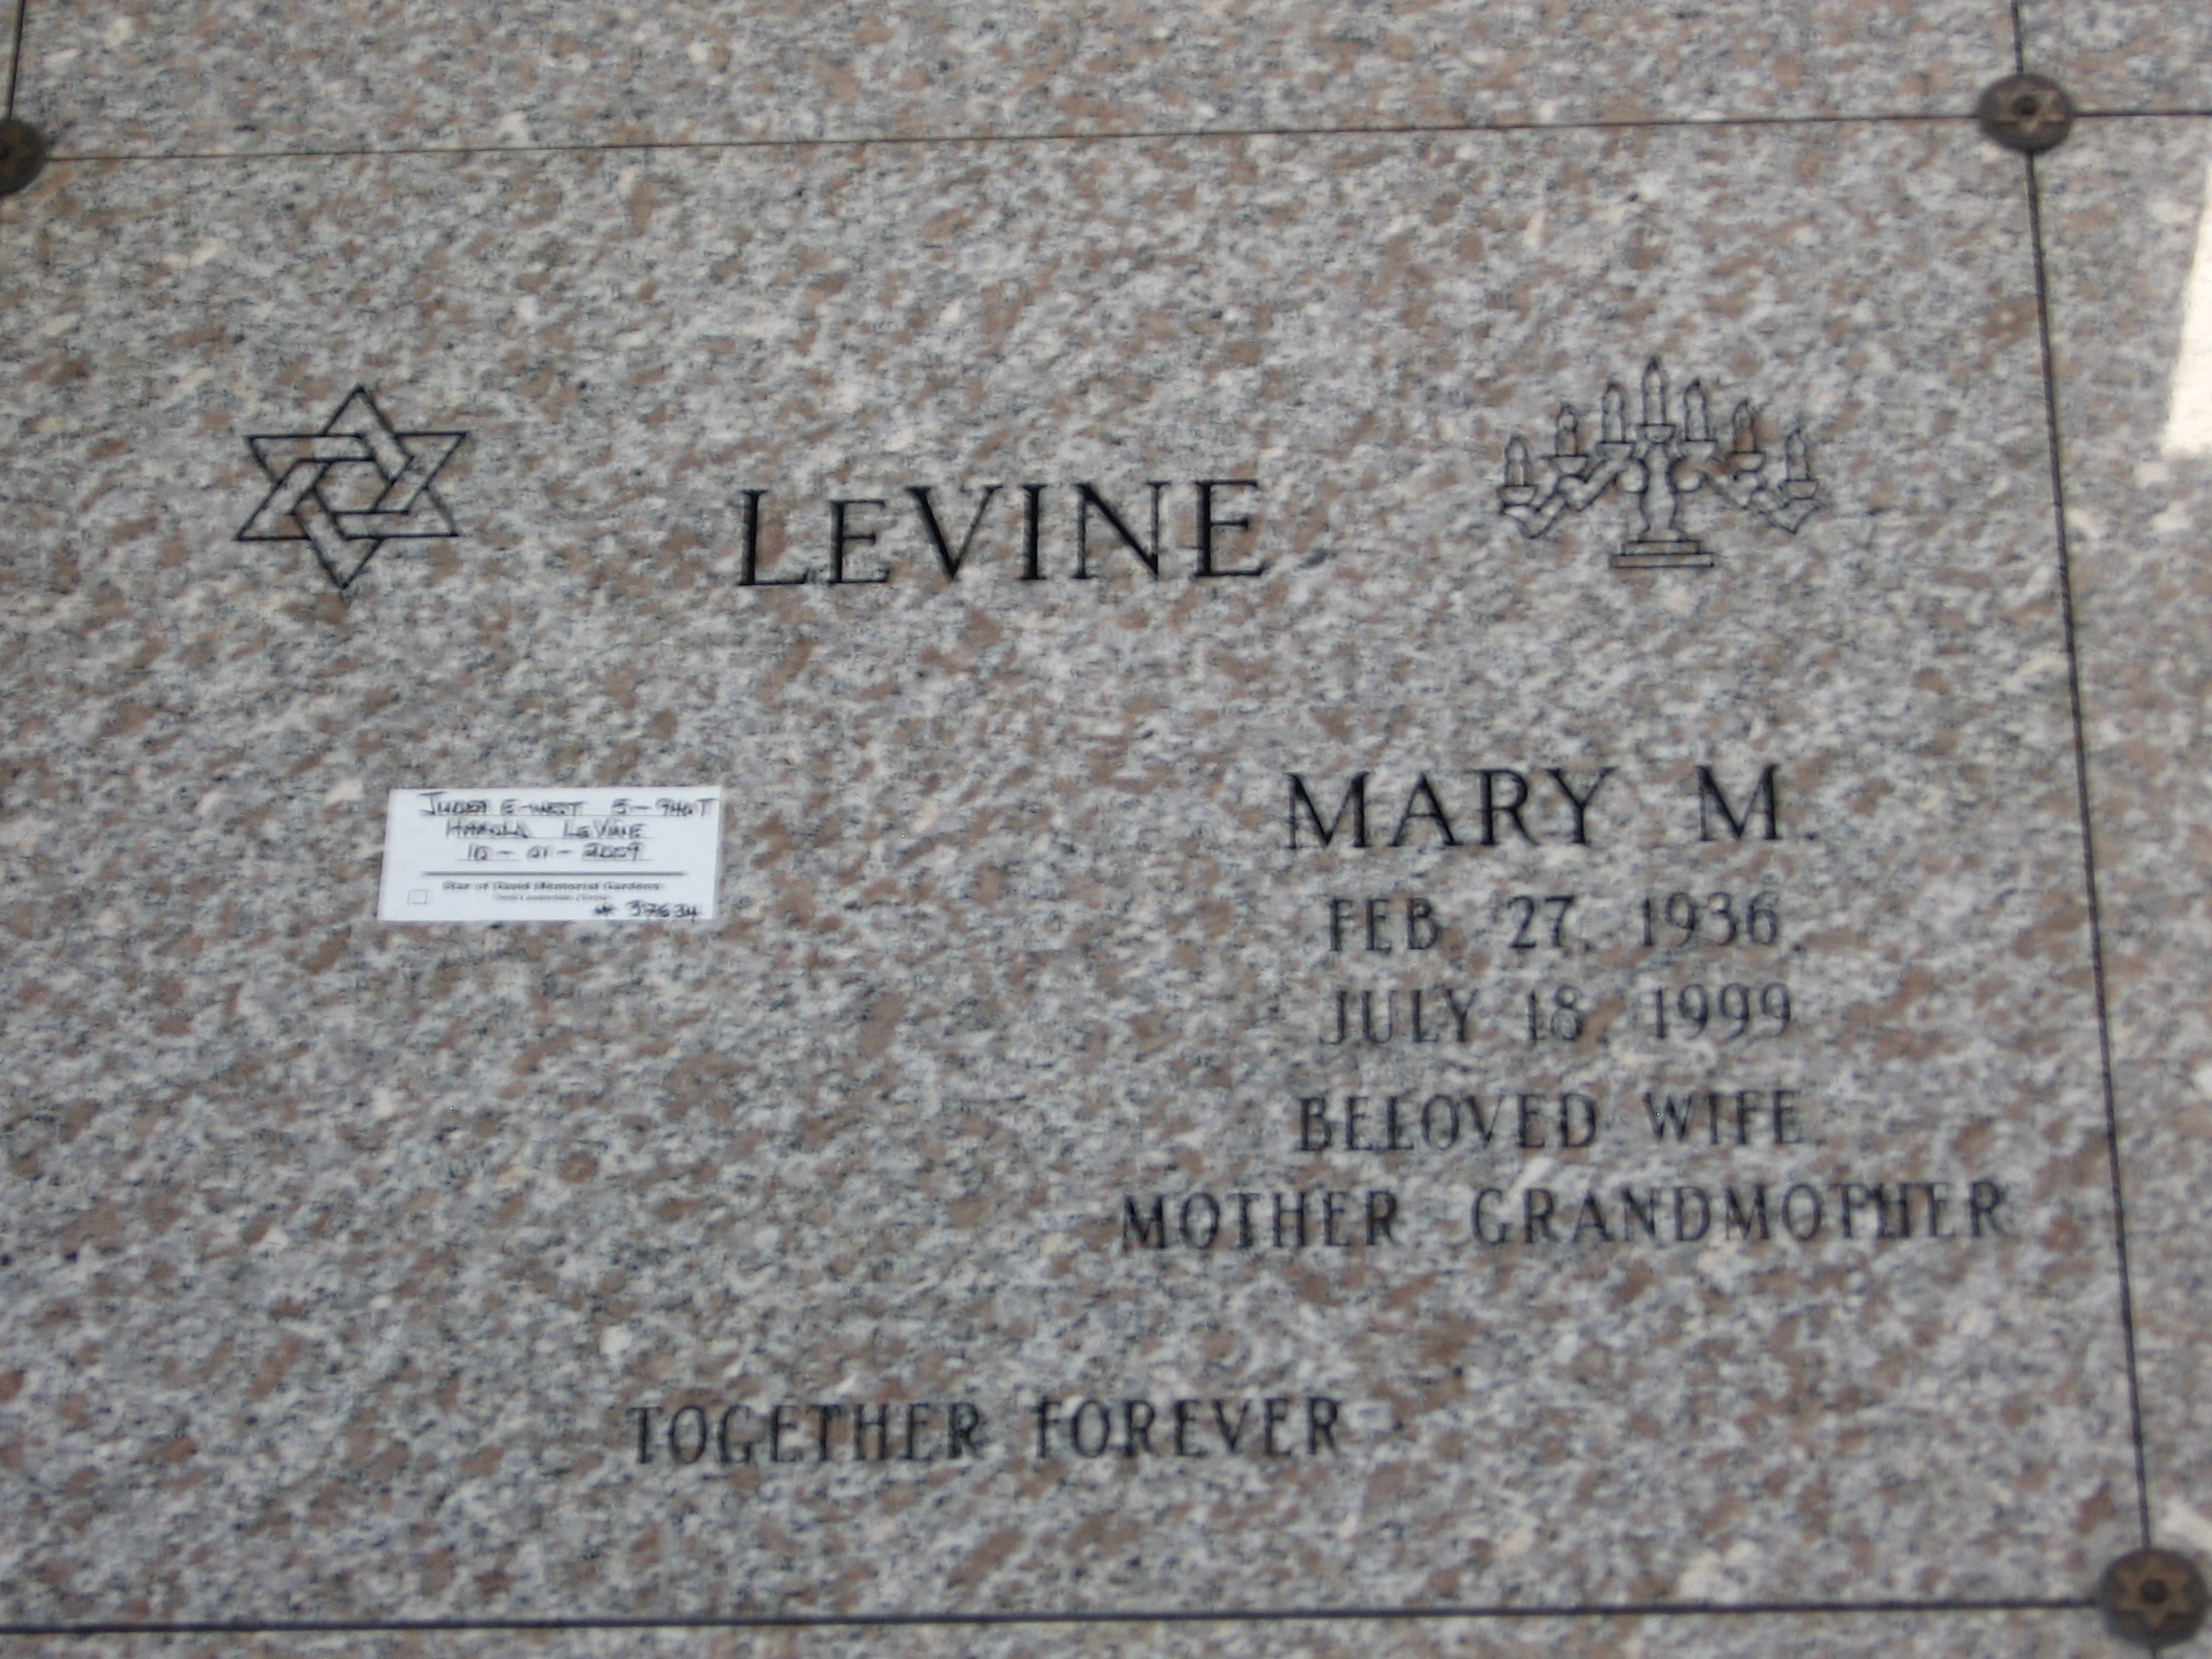 Mary M LeVine